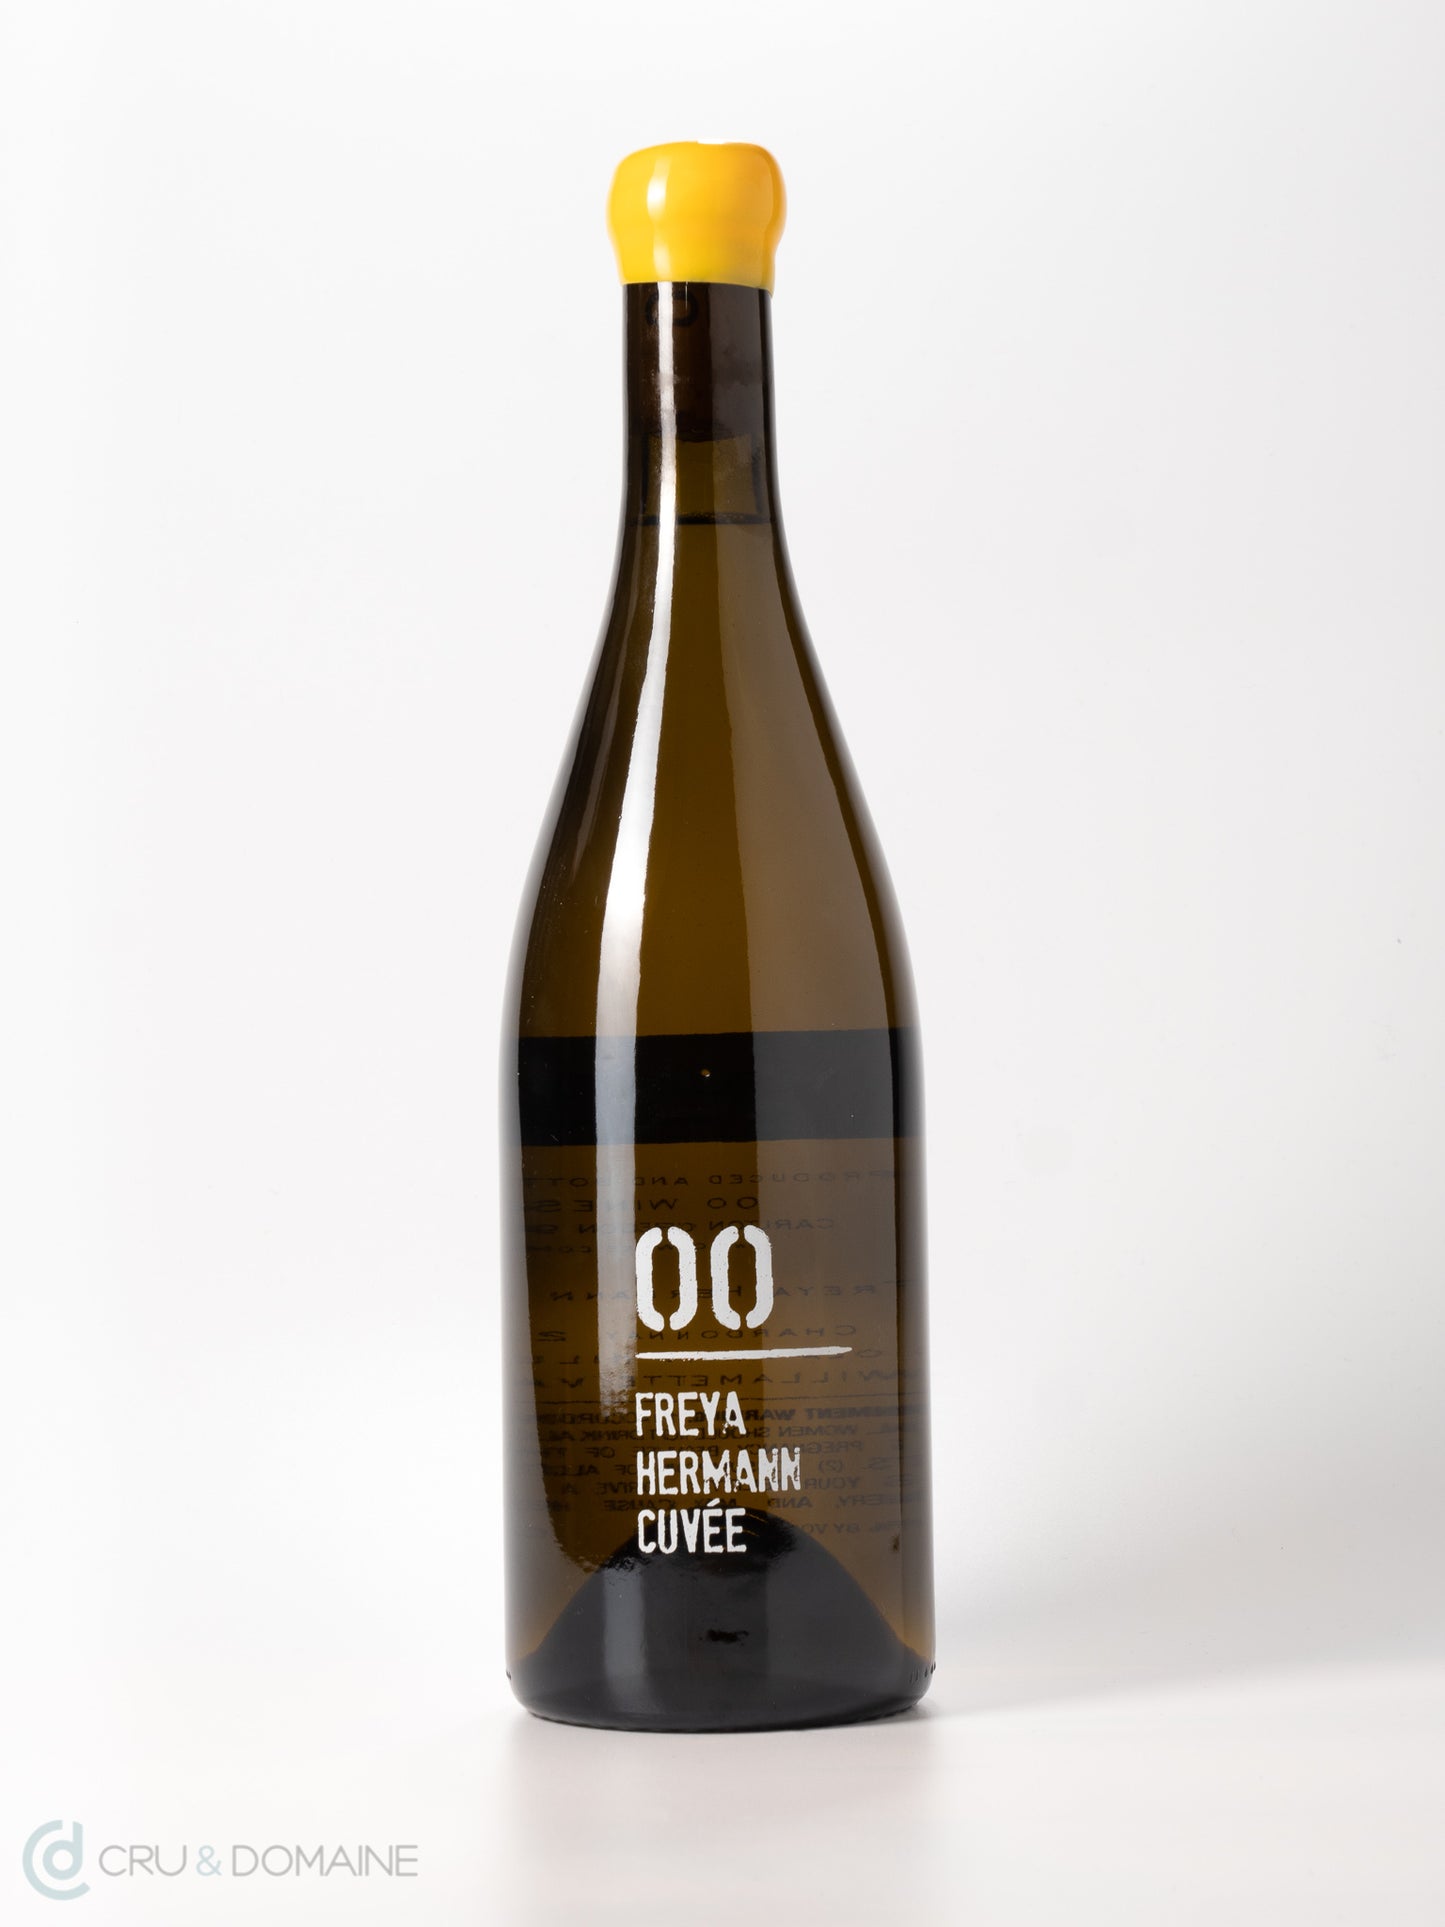 2017 00 Wines, Freya Hermann Cuvée, Chardonnay, Eola-Amity, Willamette Valley, Oregon